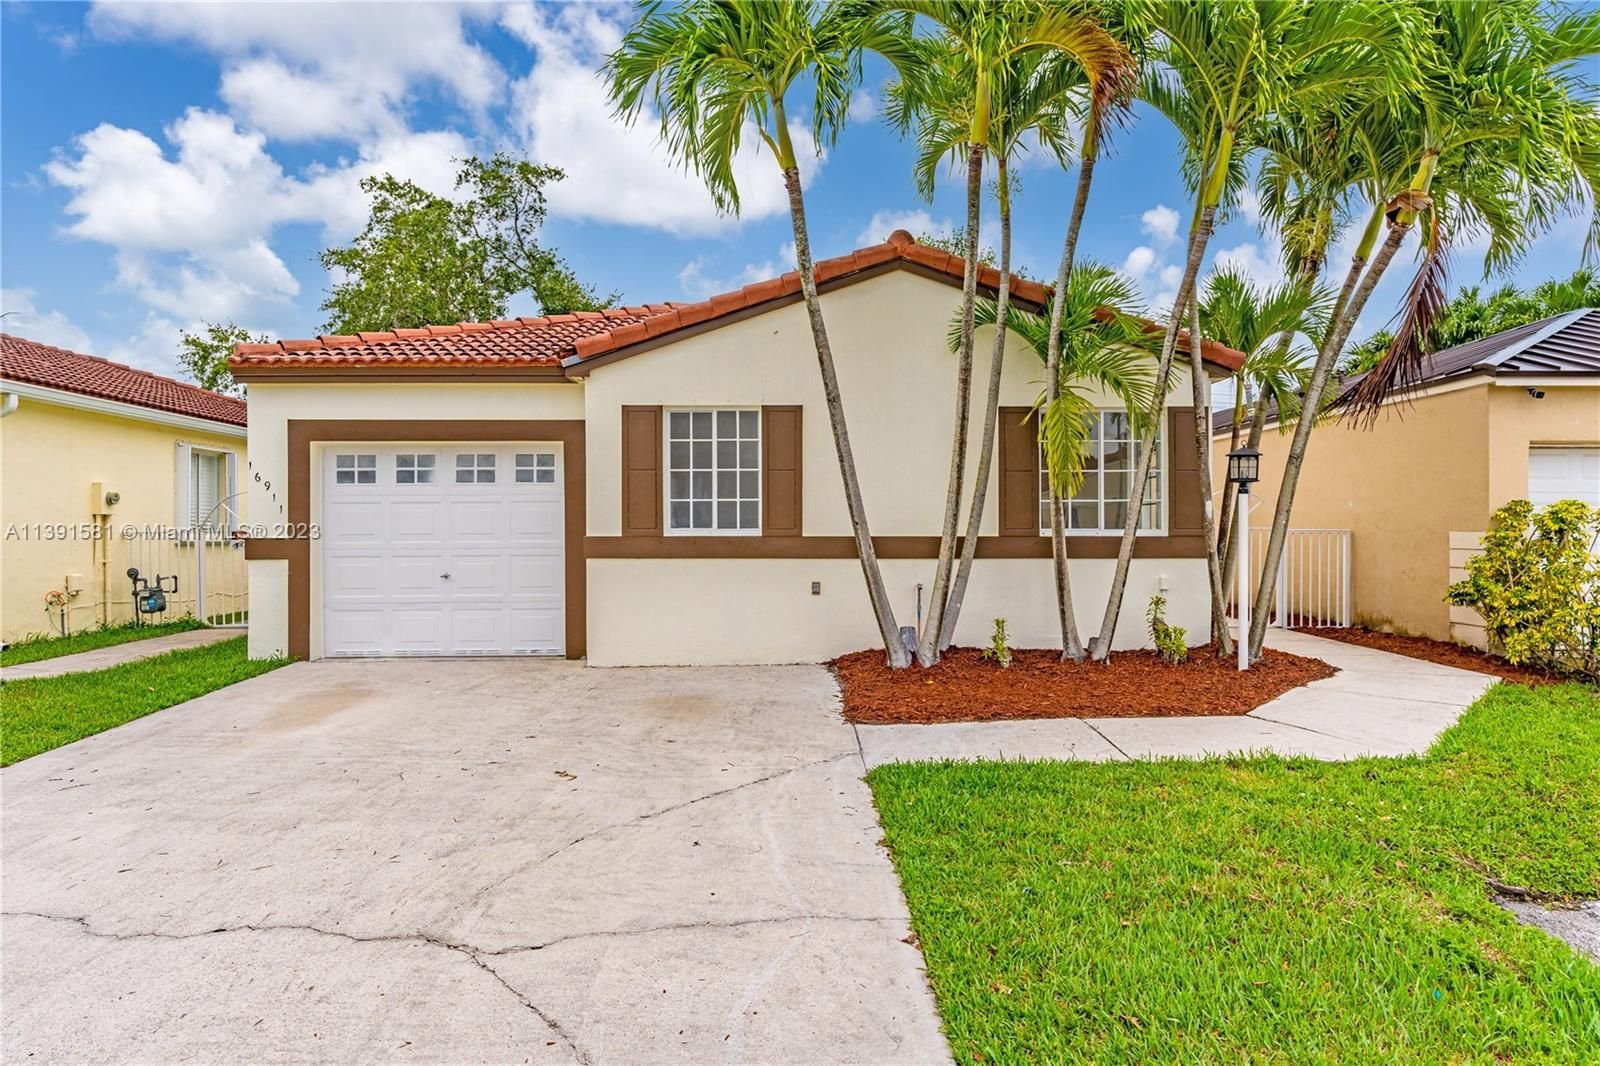 Real estate property located at 16911 139th Pl, Miami-Dade County, Miami, FL